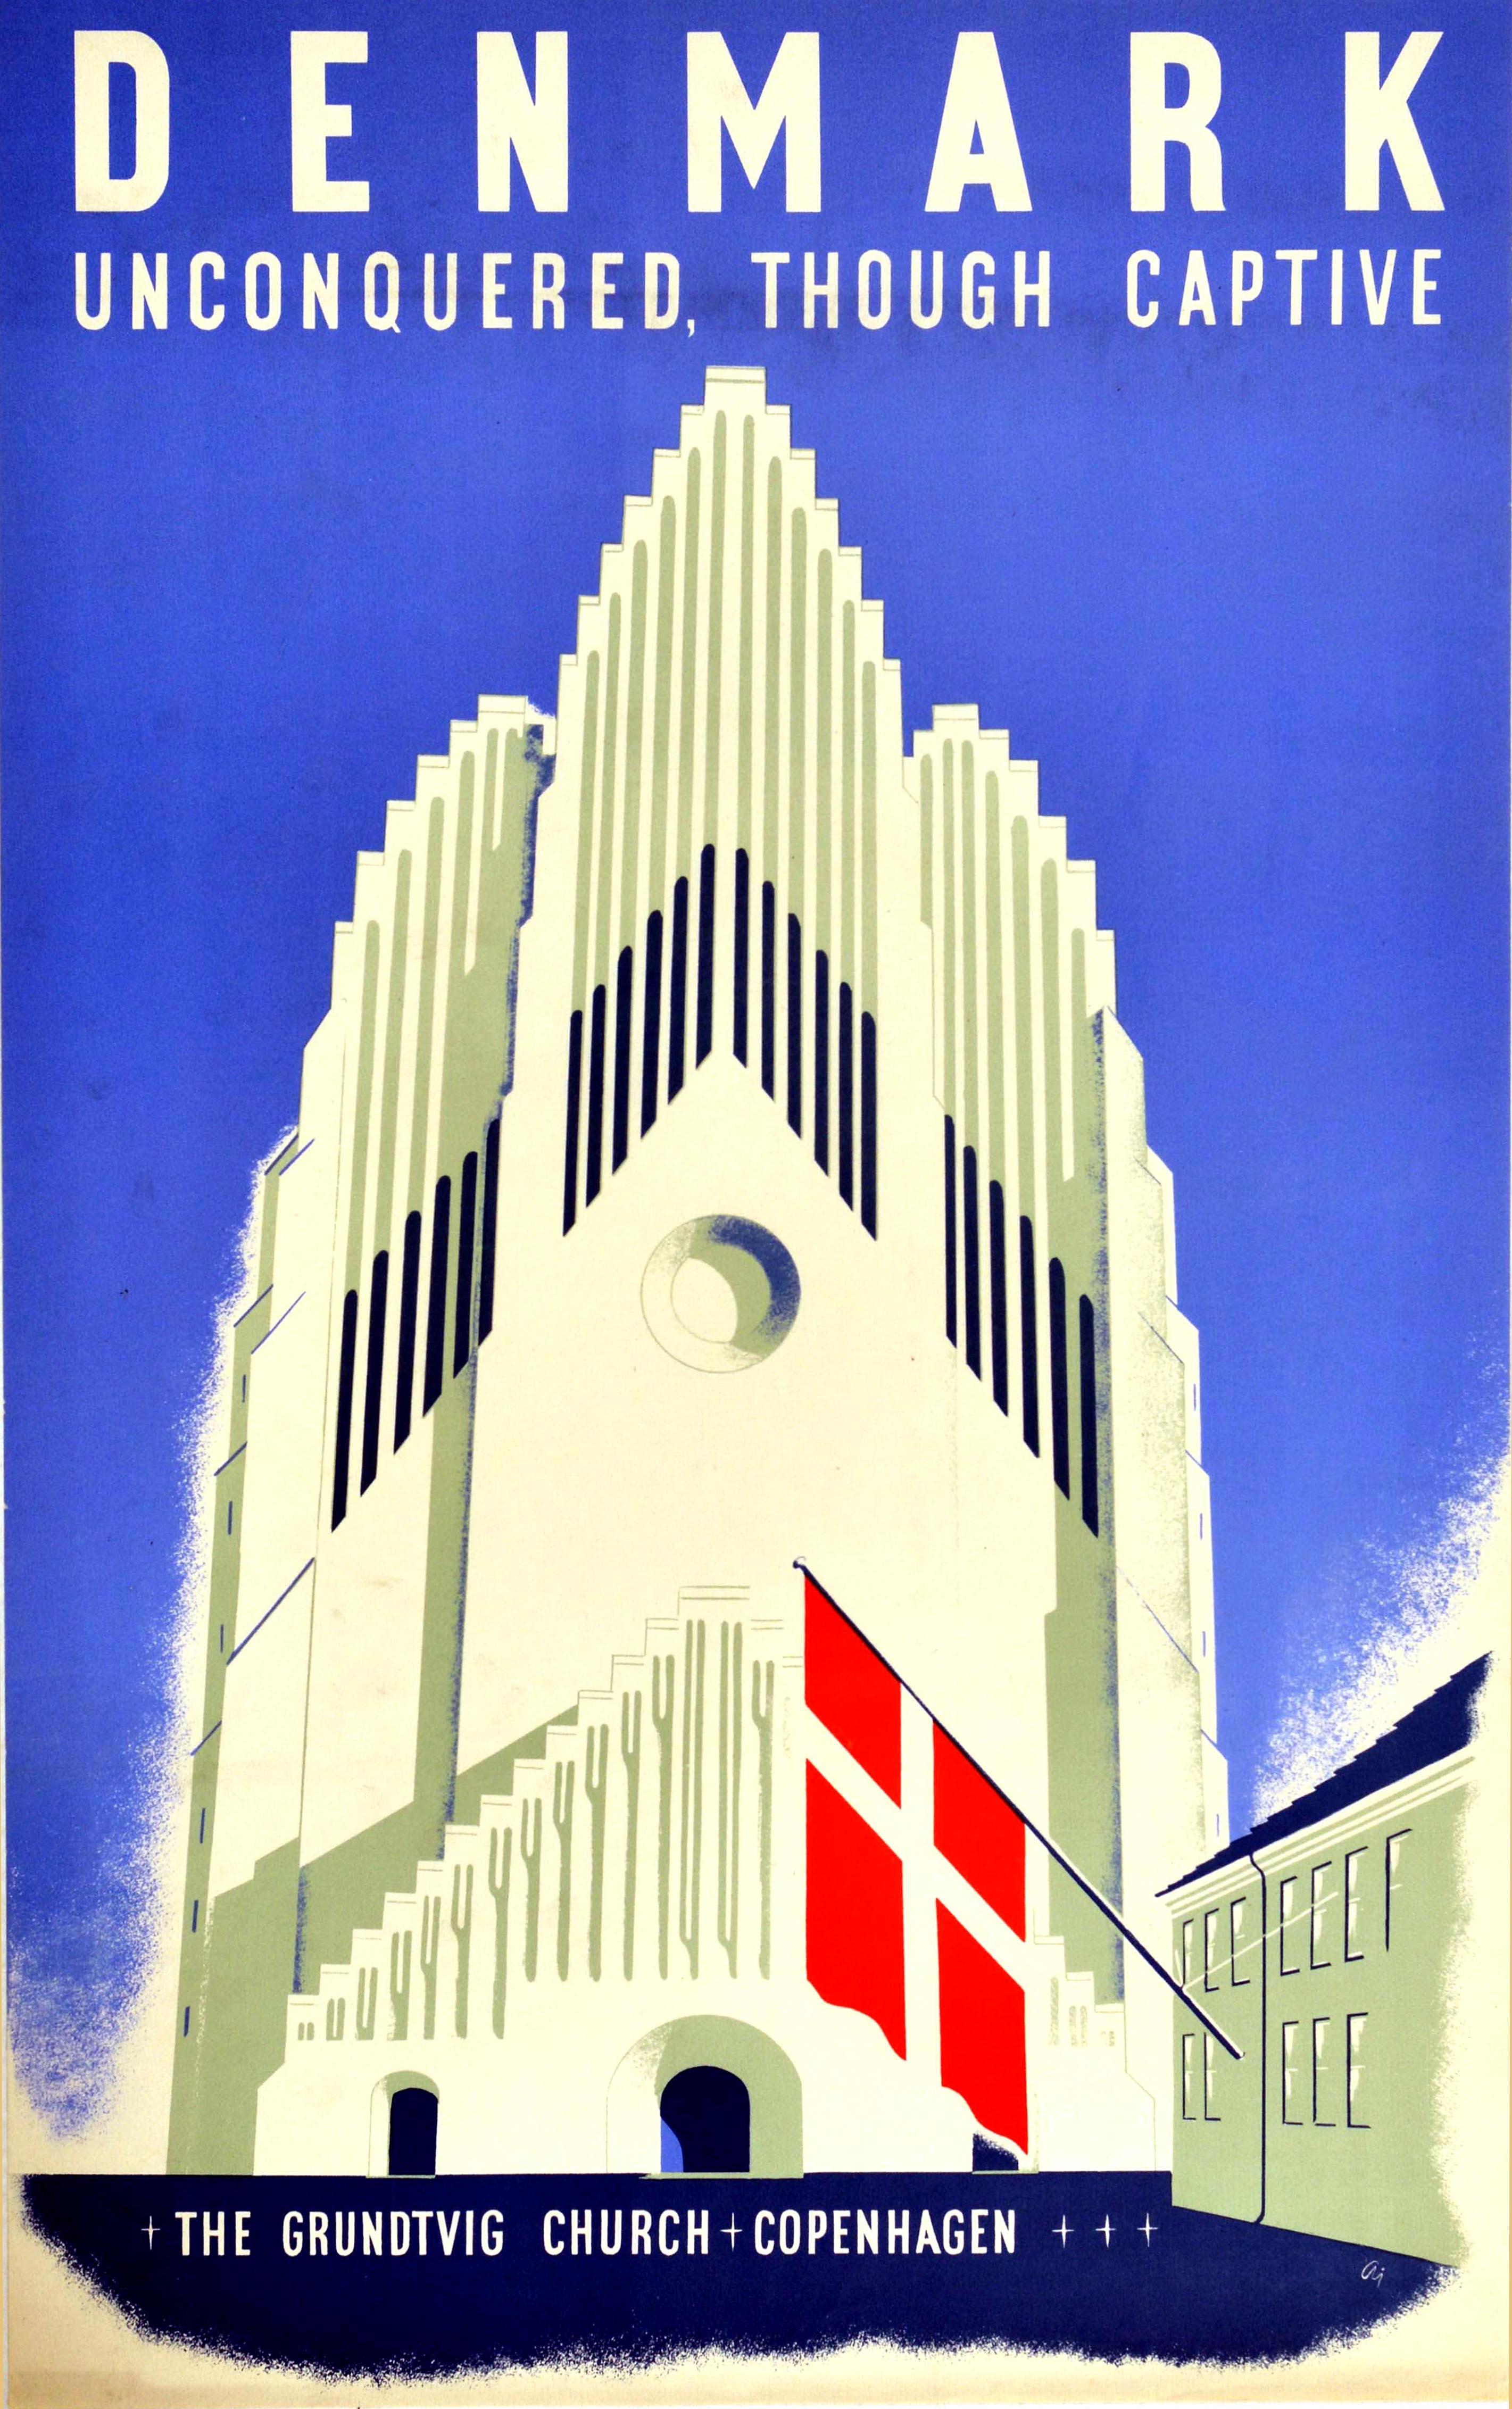 Aage W. Jorgensen Print - Original Vintage Poster Denmark Unconquered Though Captive WWII Grundtvig Church